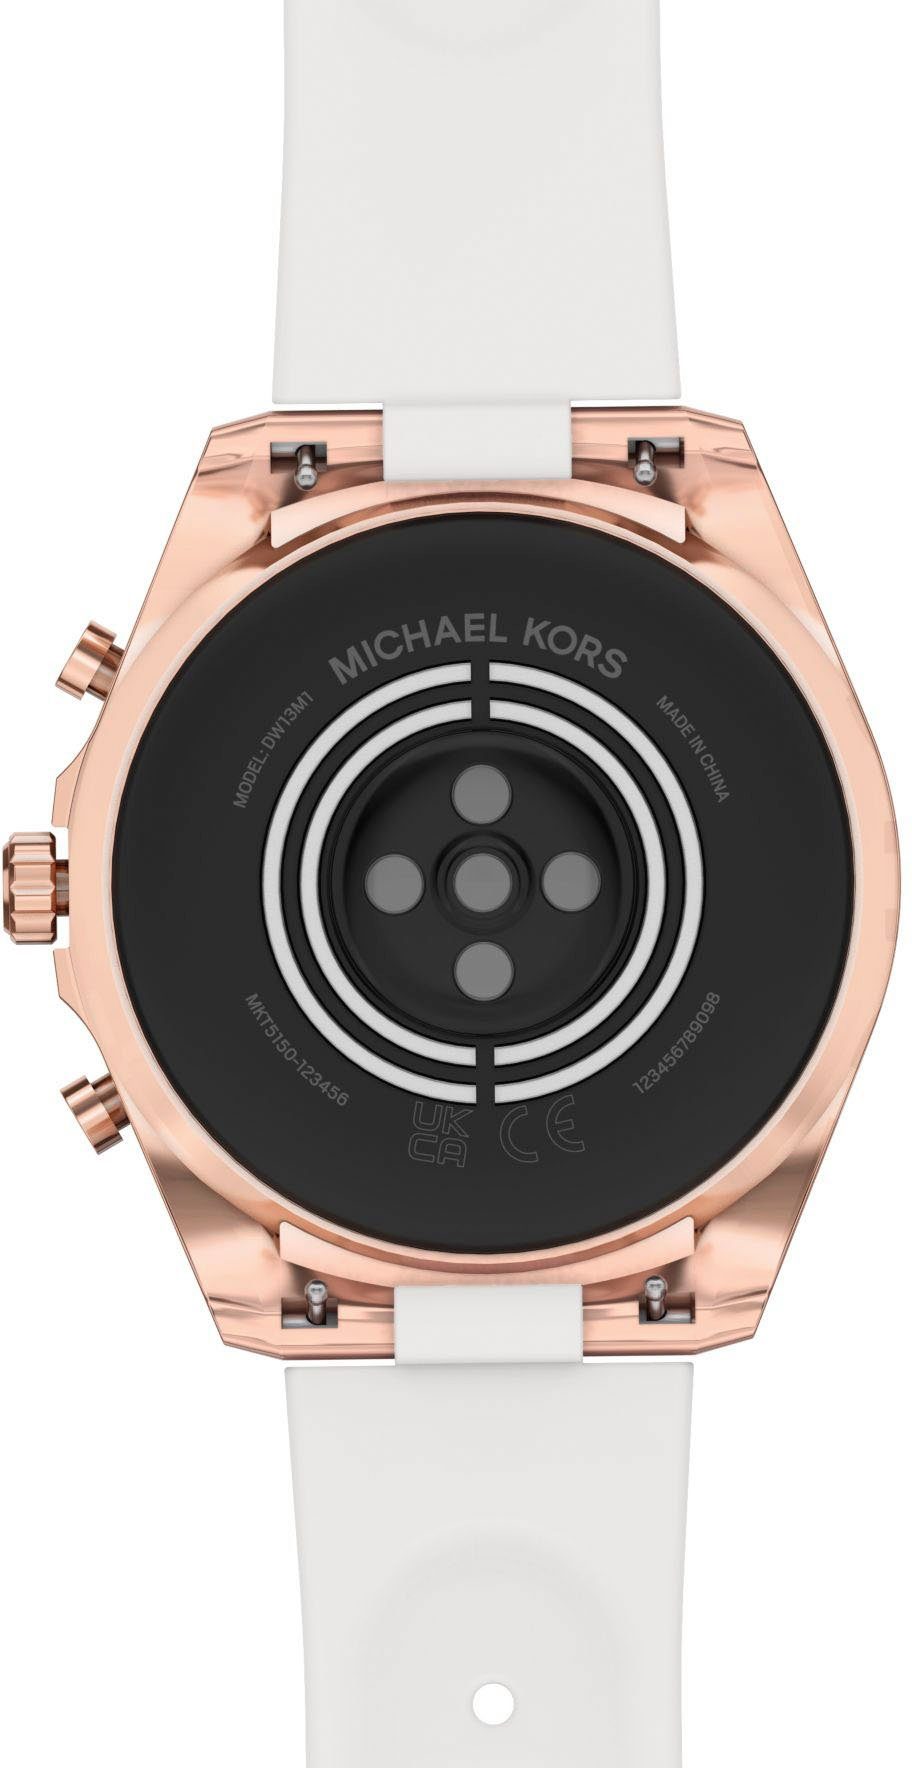 (Wear GEN by MKT5153 ACCESS OS Smartwatch KORS 6 BRADSHAW, MICHAEL Google)